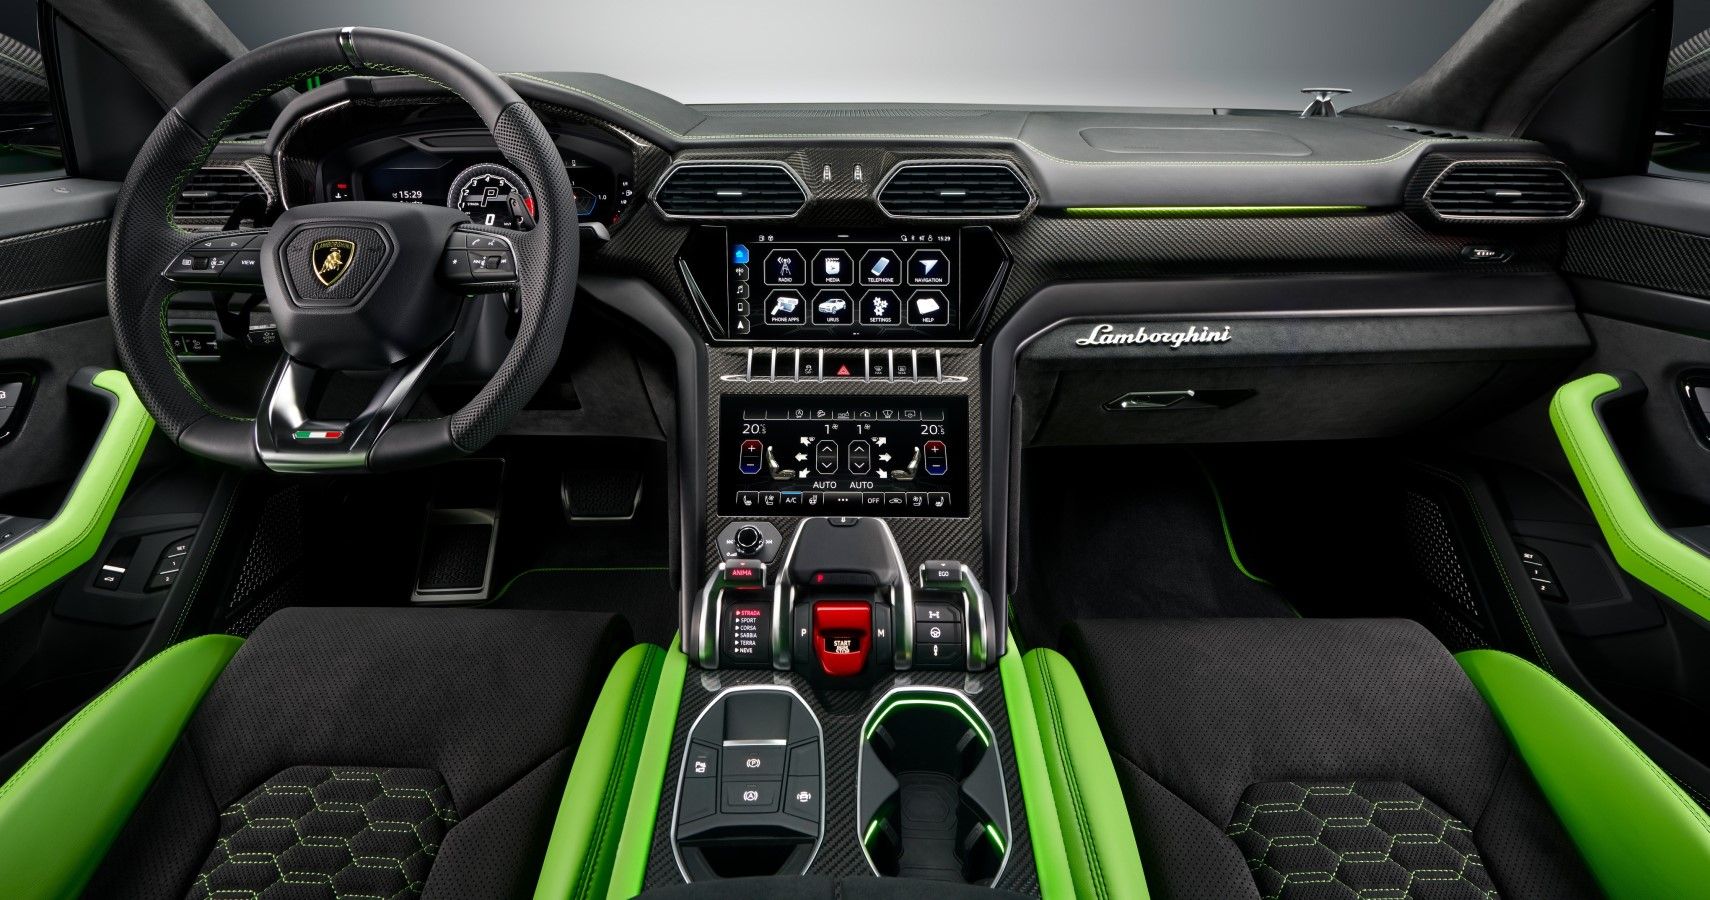 2021 Lamborghini Urus interior dashboard view